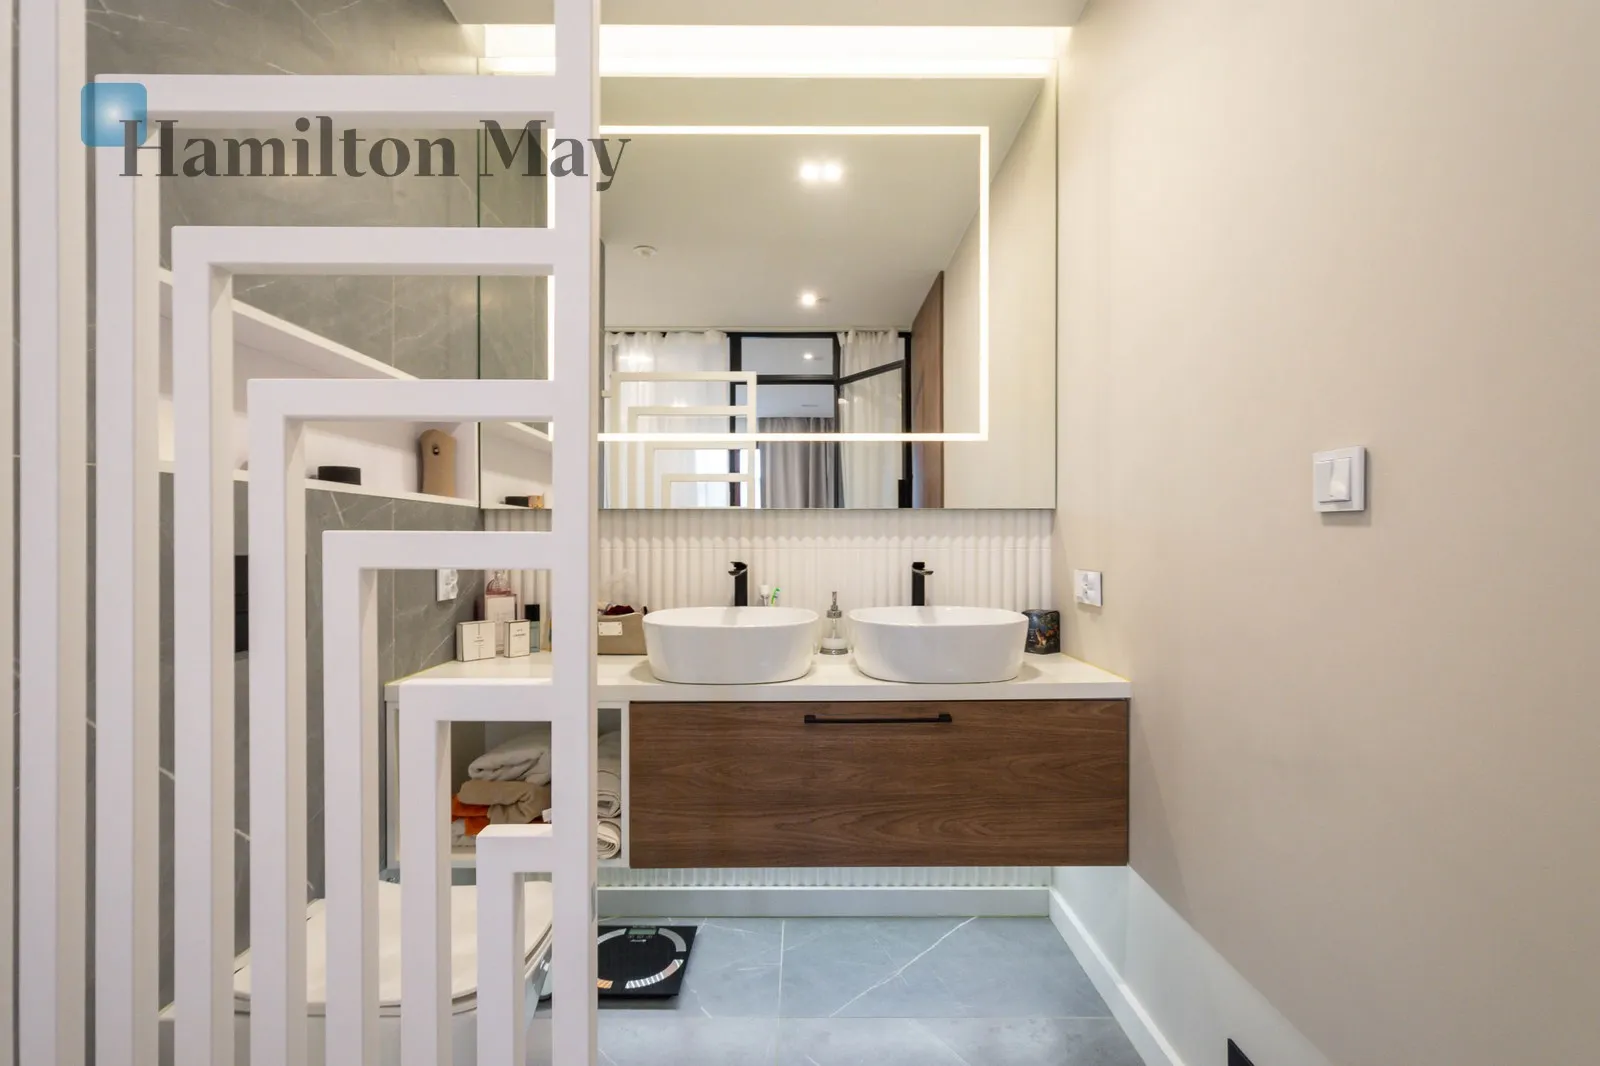 Level: 4 Price: 1280000 PLN Bedrooms: 2 Bathrooms: 2 Size: 79m2 Price/m2: 16203 PLN